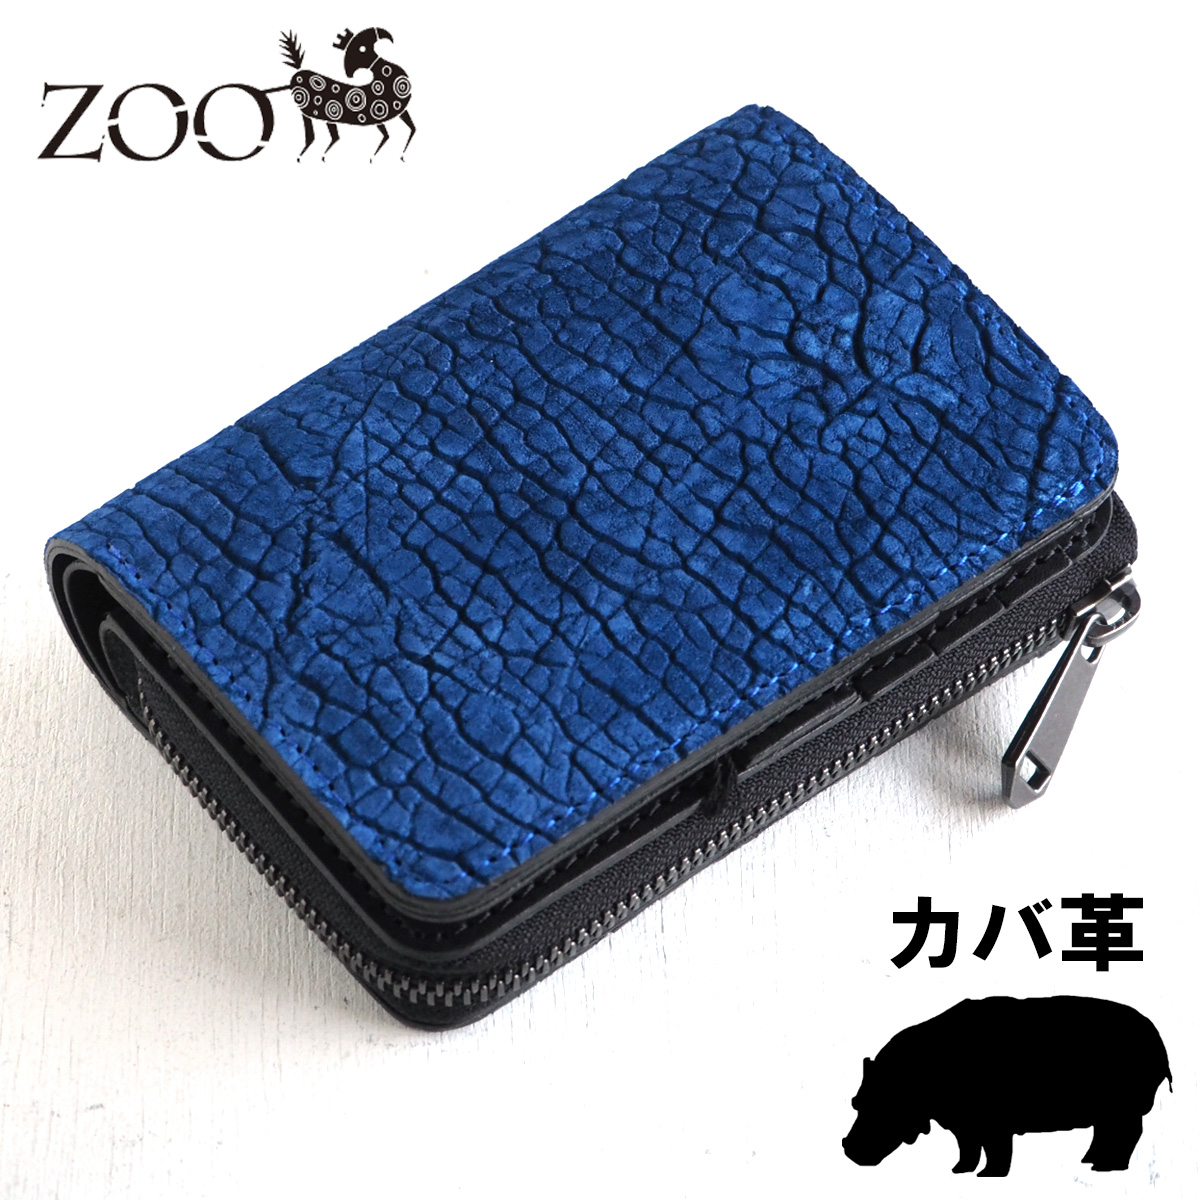 ZOO（ズー） カバ革 ディンゴミディアムウォレット8 二つ折り財布 ブルー [Z-ZMW-018-BL] 革製品 革小物